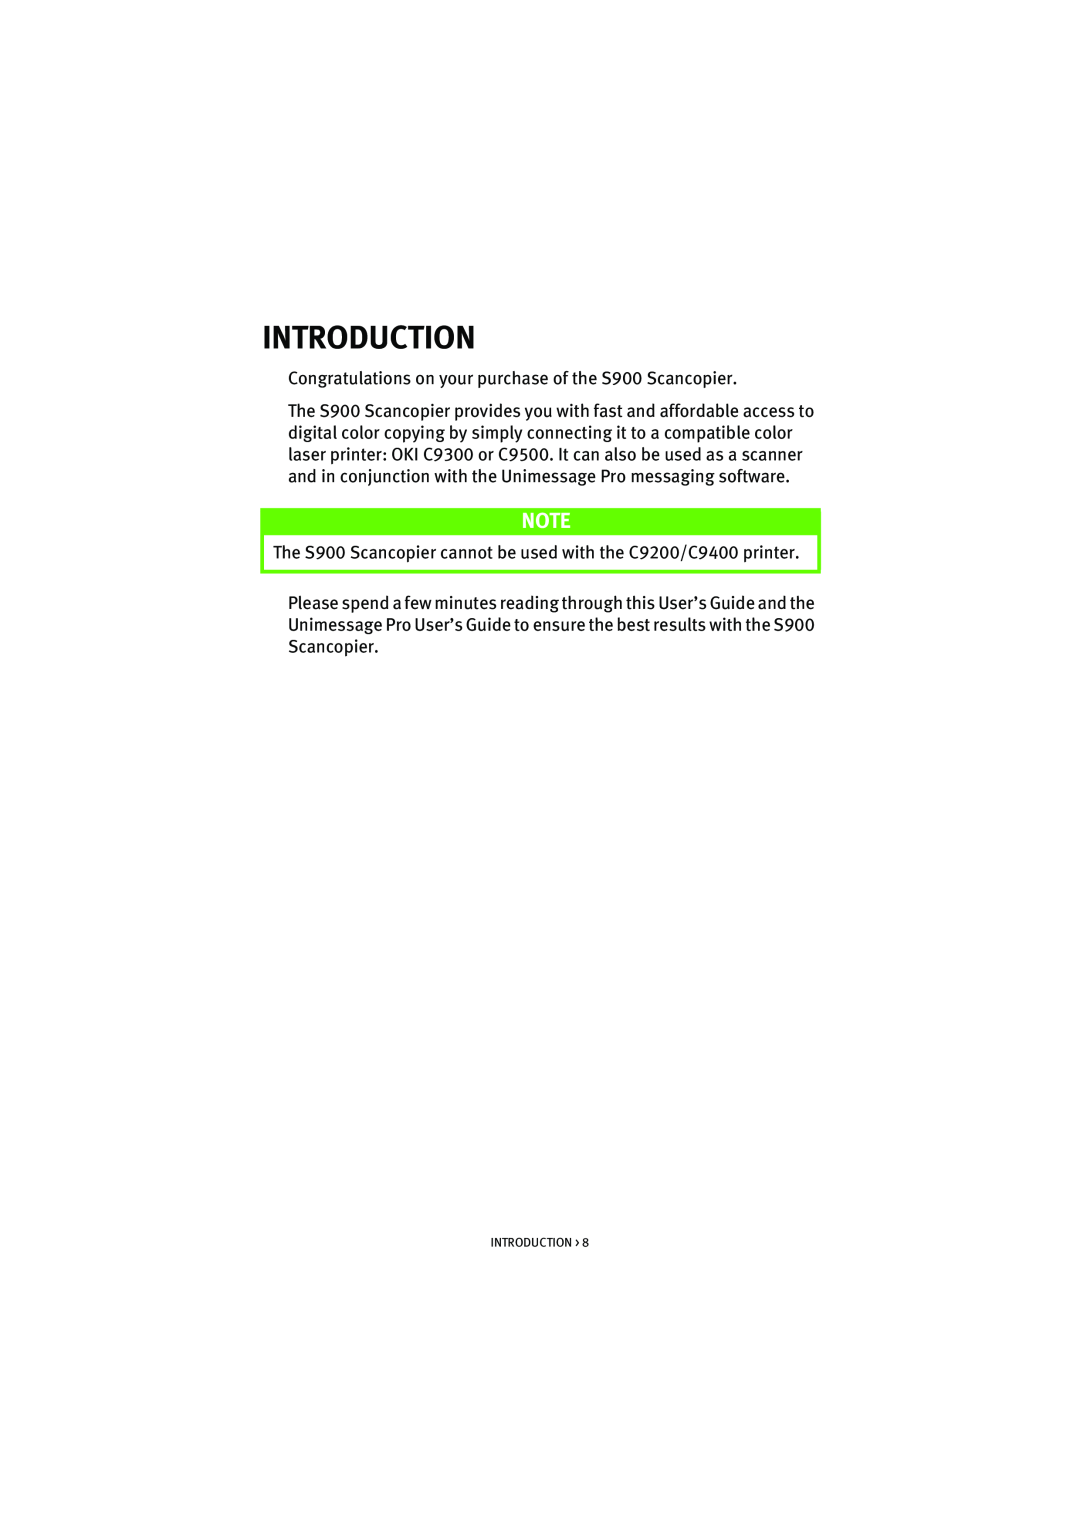 Oki S900 manual Introduction 